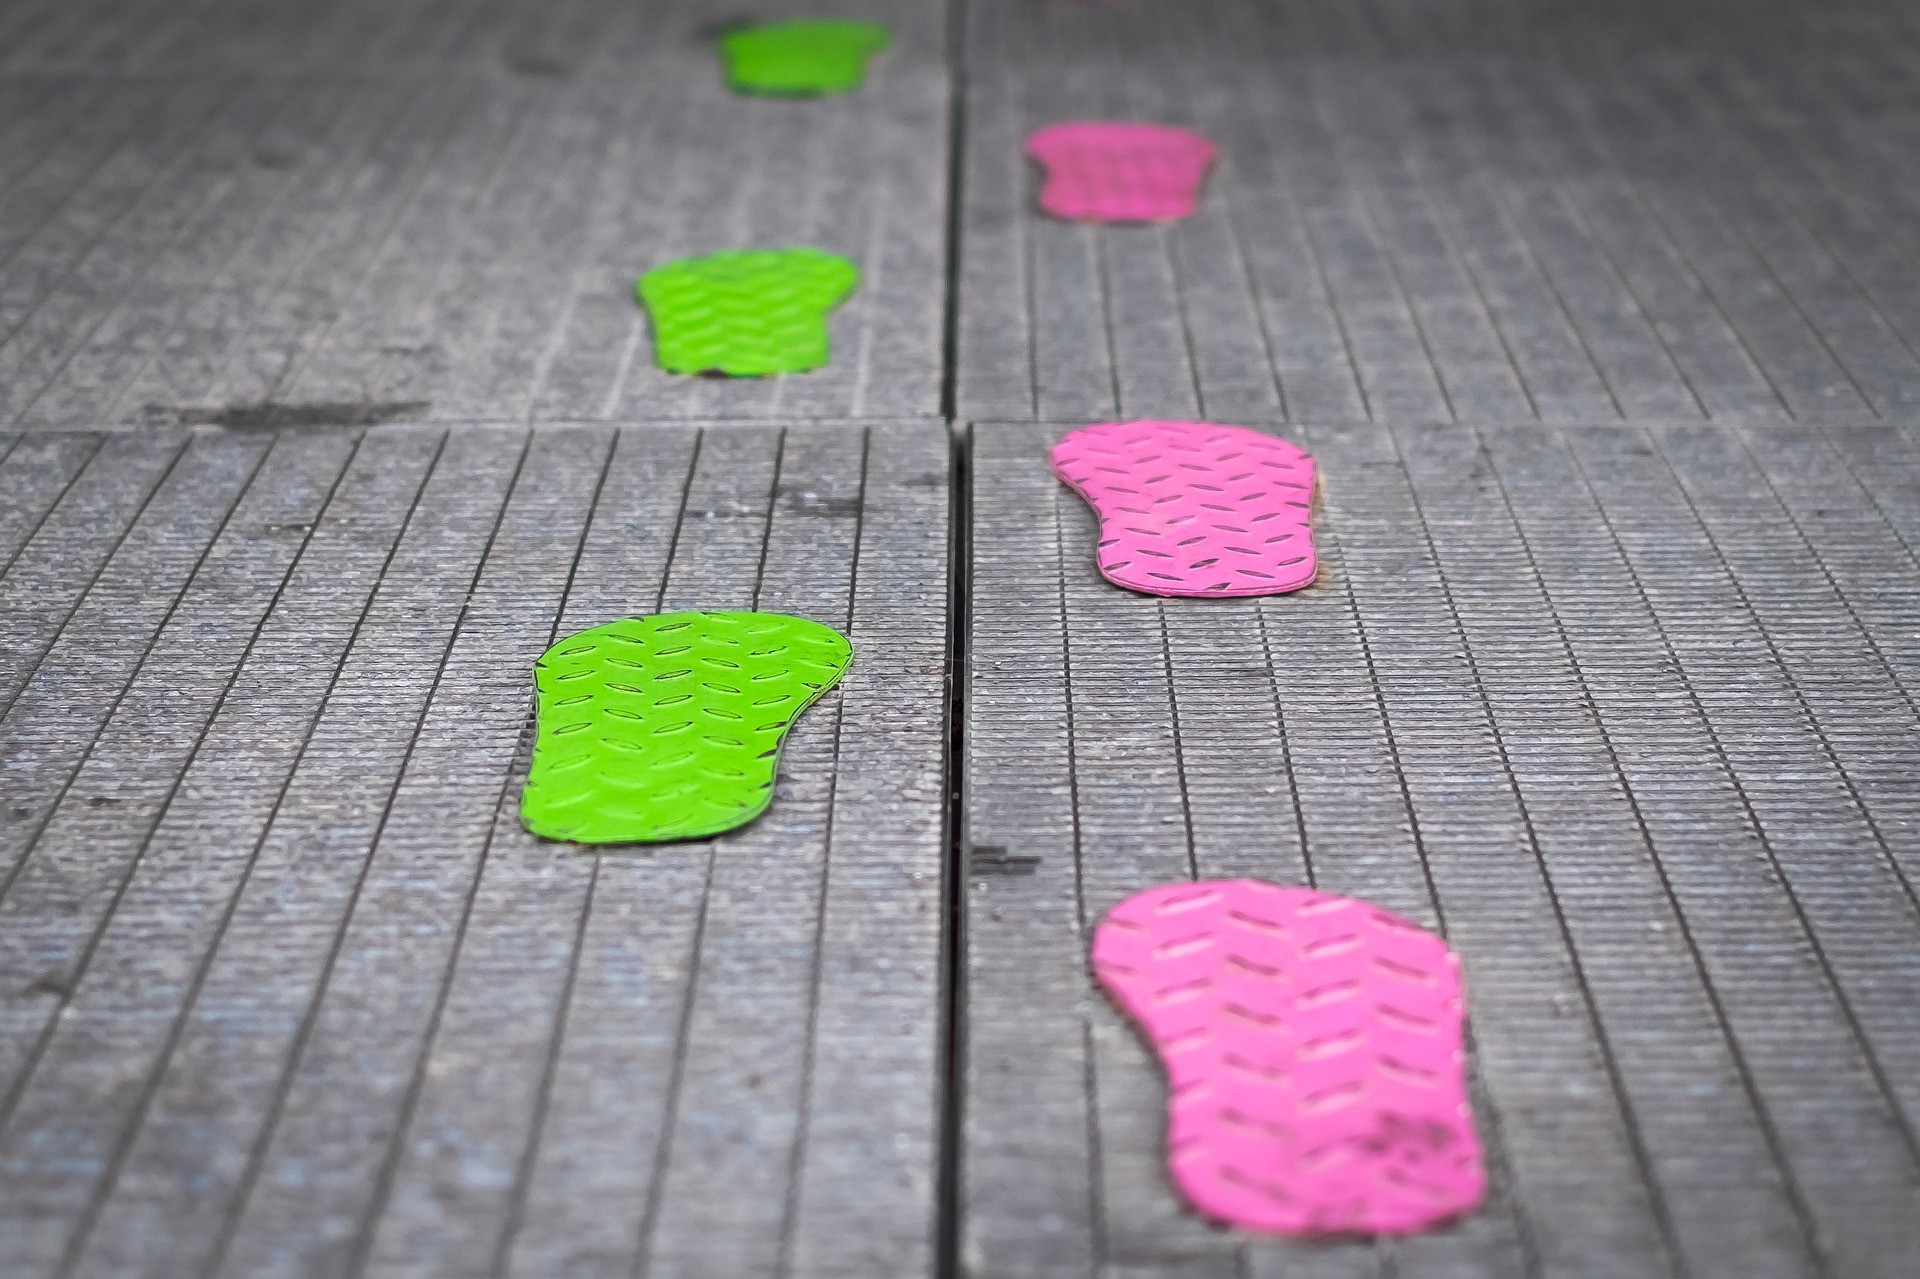 Image displays pink and green coloured footsteps depicting taking steps